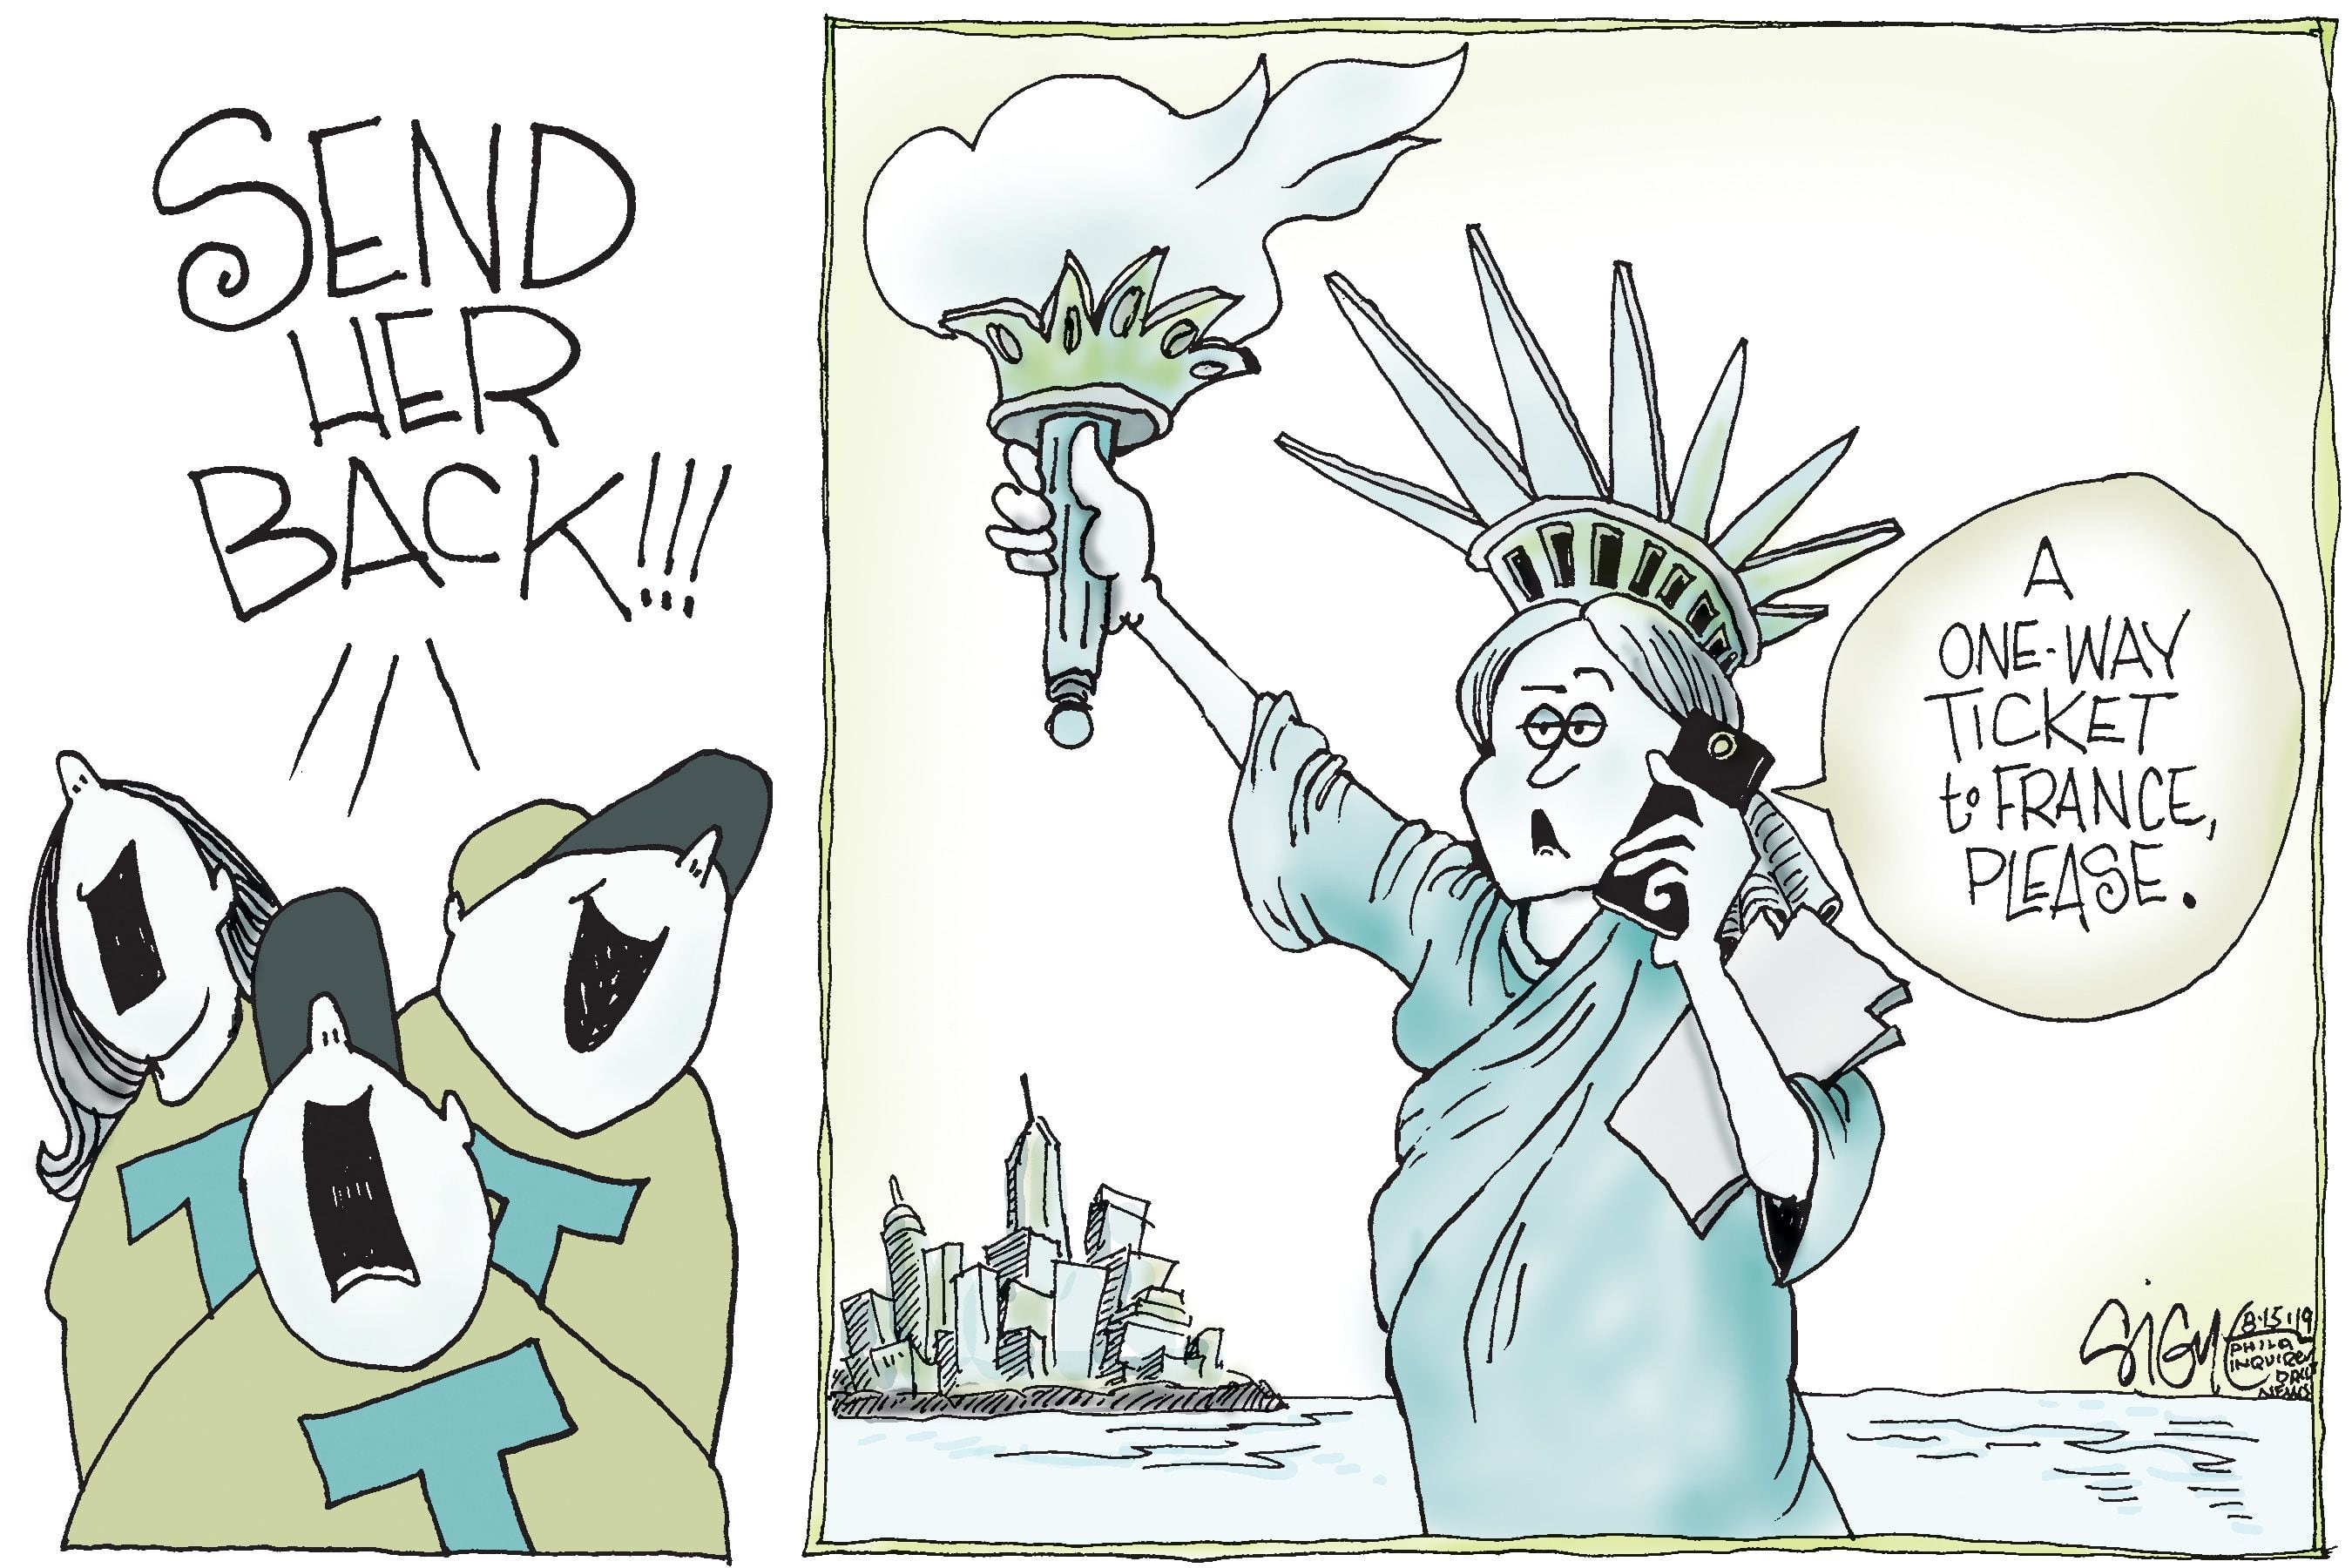 immigration political cartoons